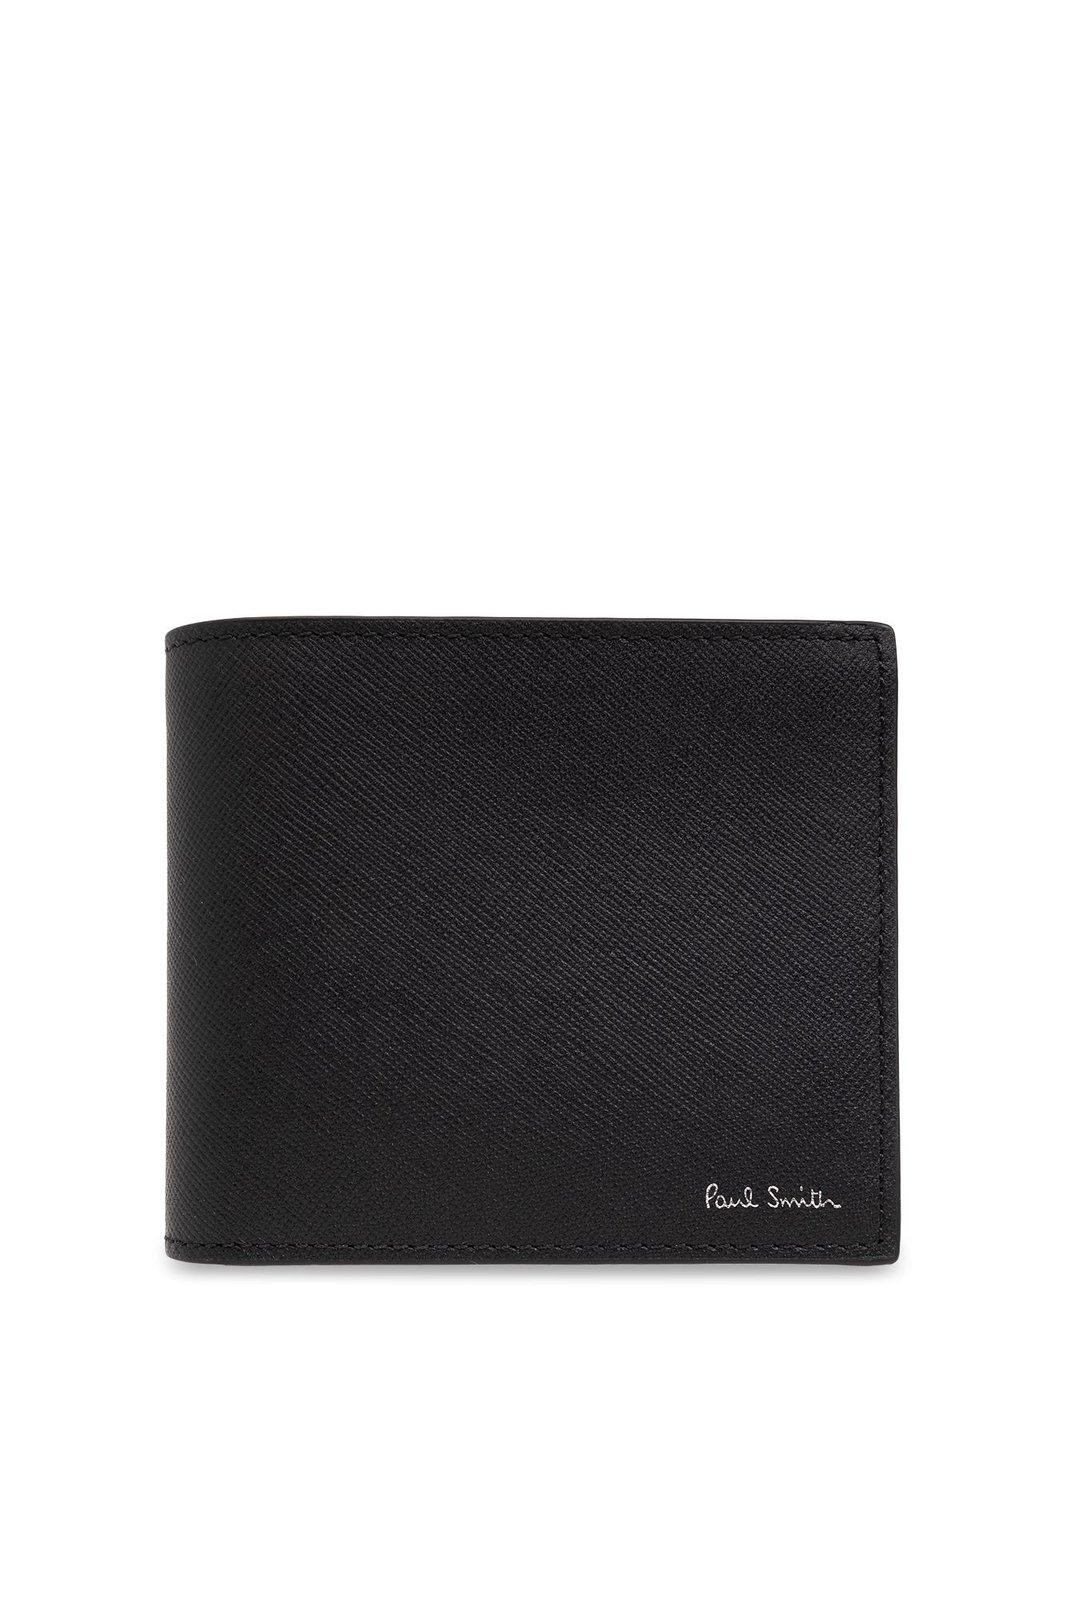 Paul Smith Folding Wallet With Logo In Black